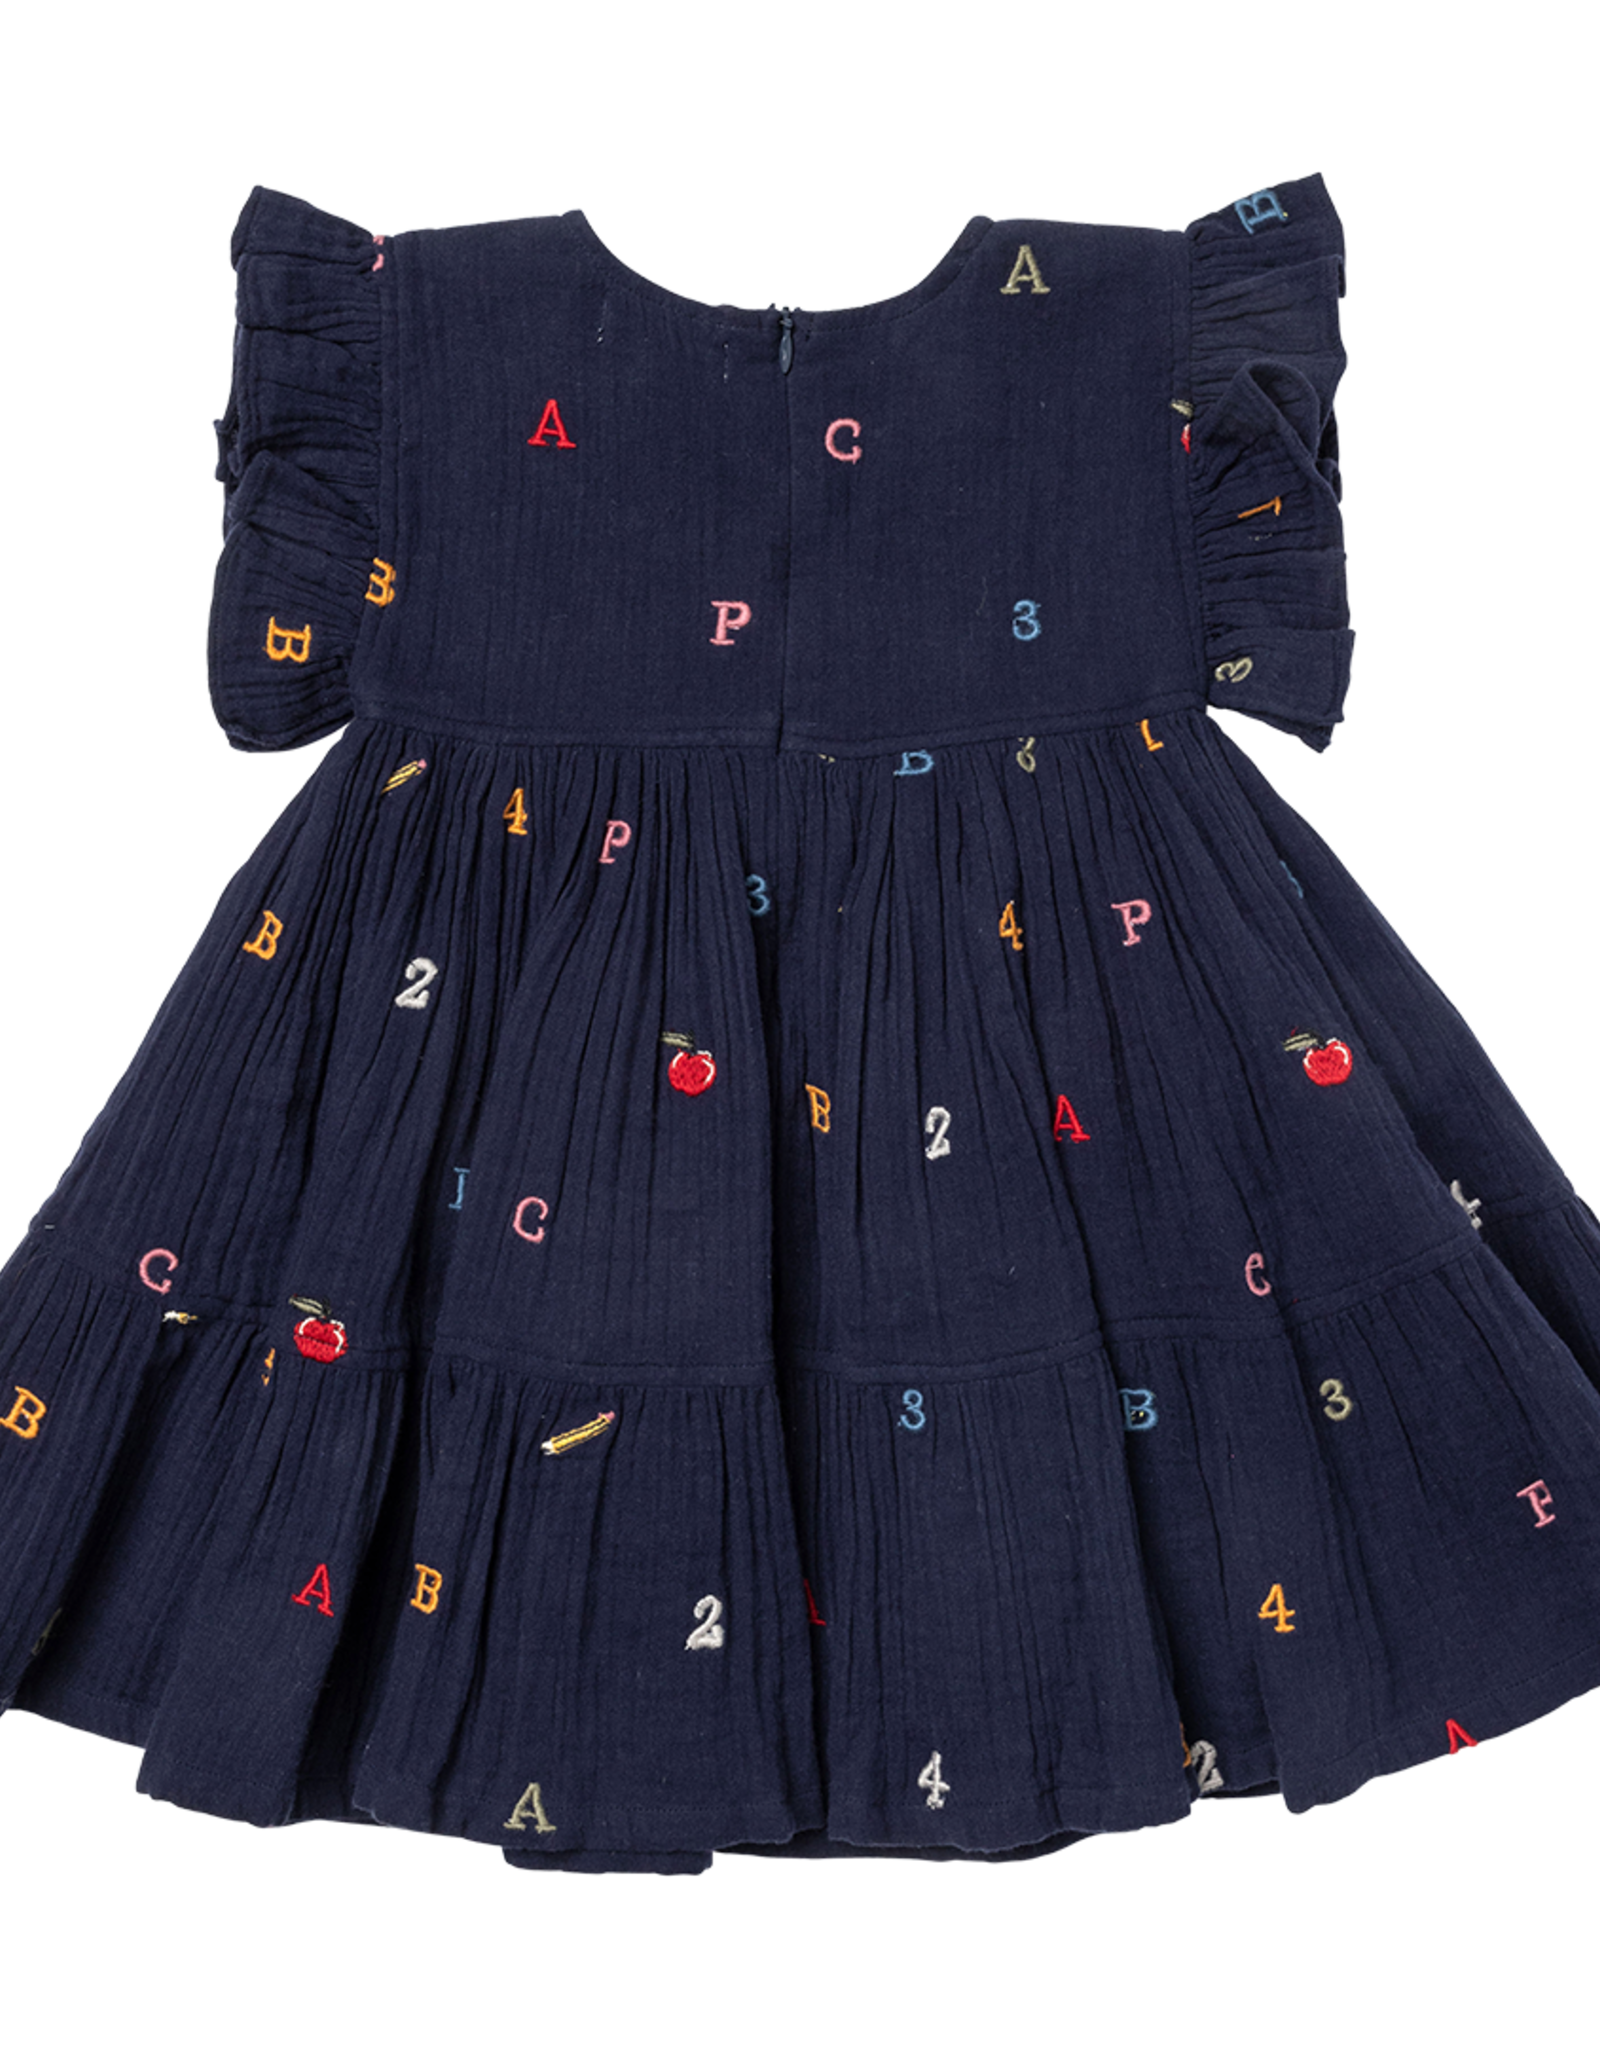 Pink Chicken girls kit dress - alphabet embroidery